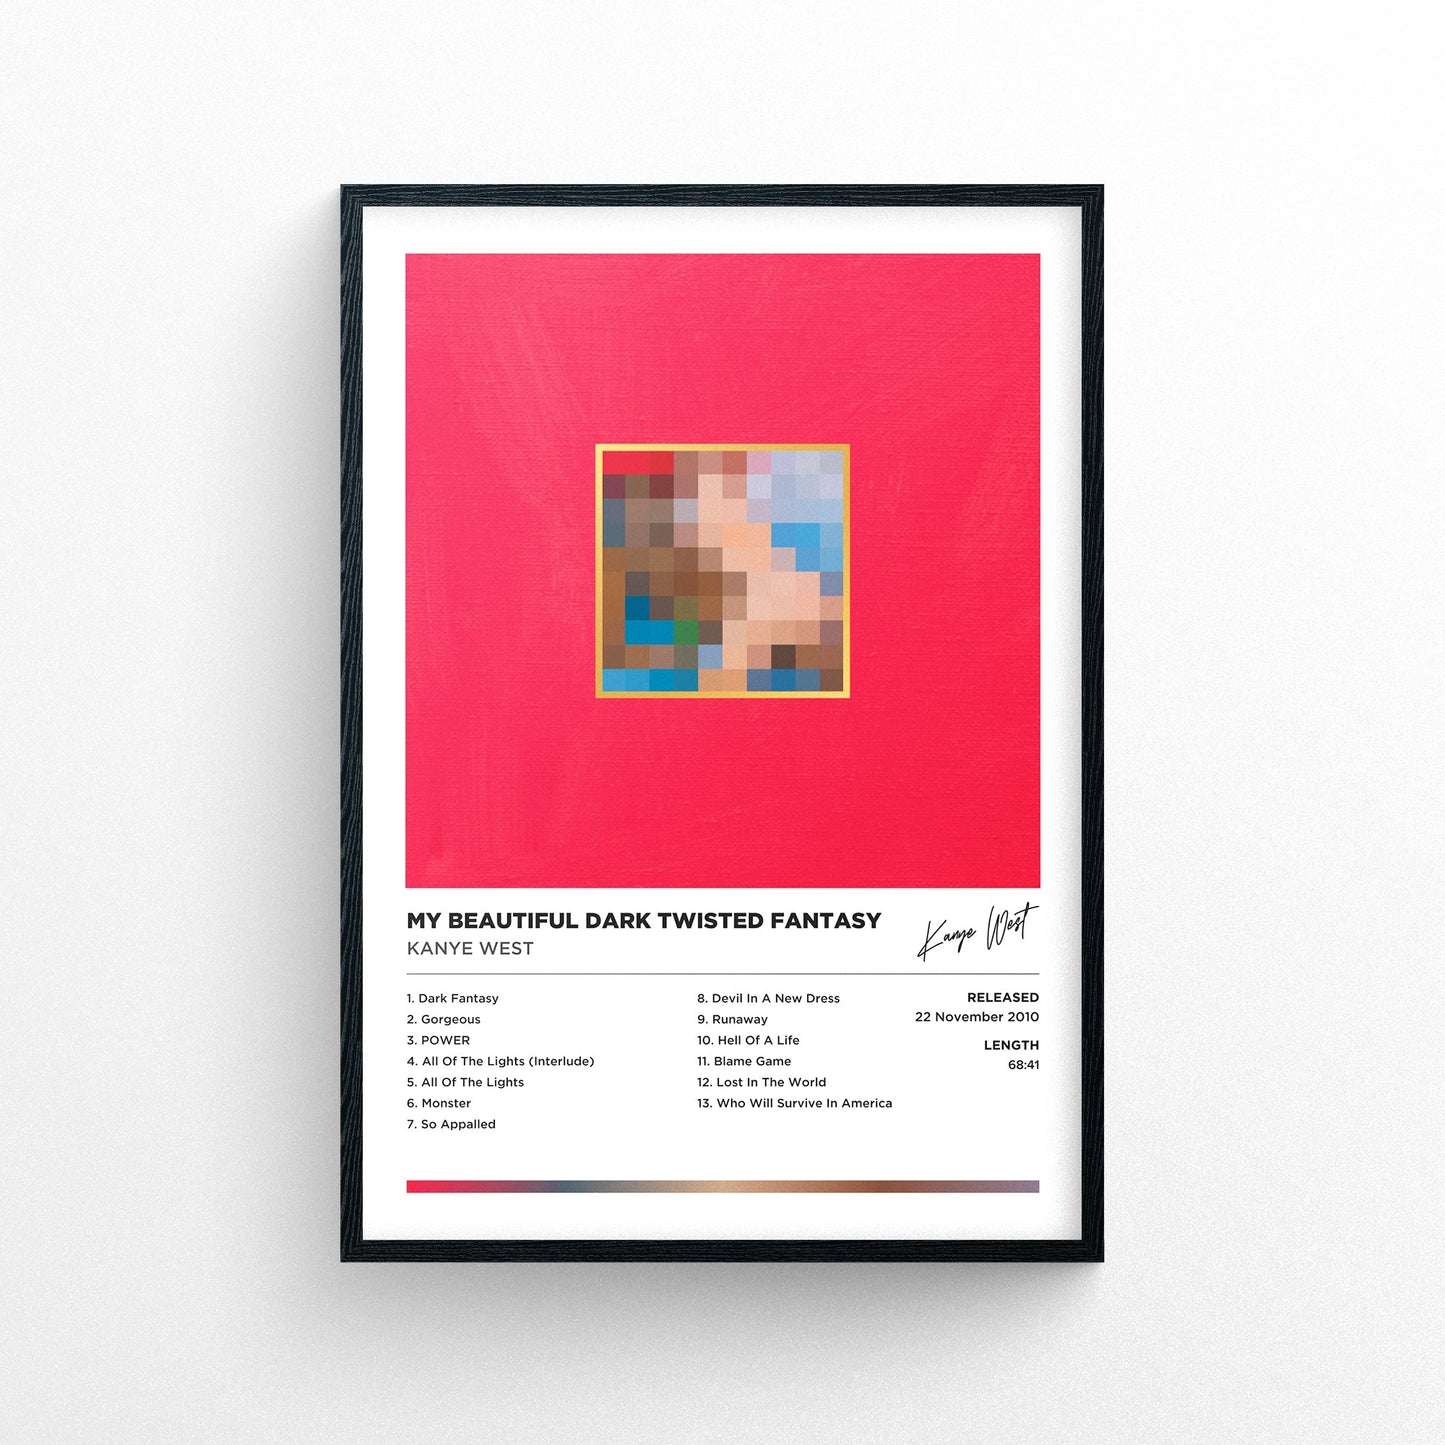 Kanye West - My Beautiful Dark Twisted Fantasy Framed Poster Print | Polaroid Style | Album Cover Artwork